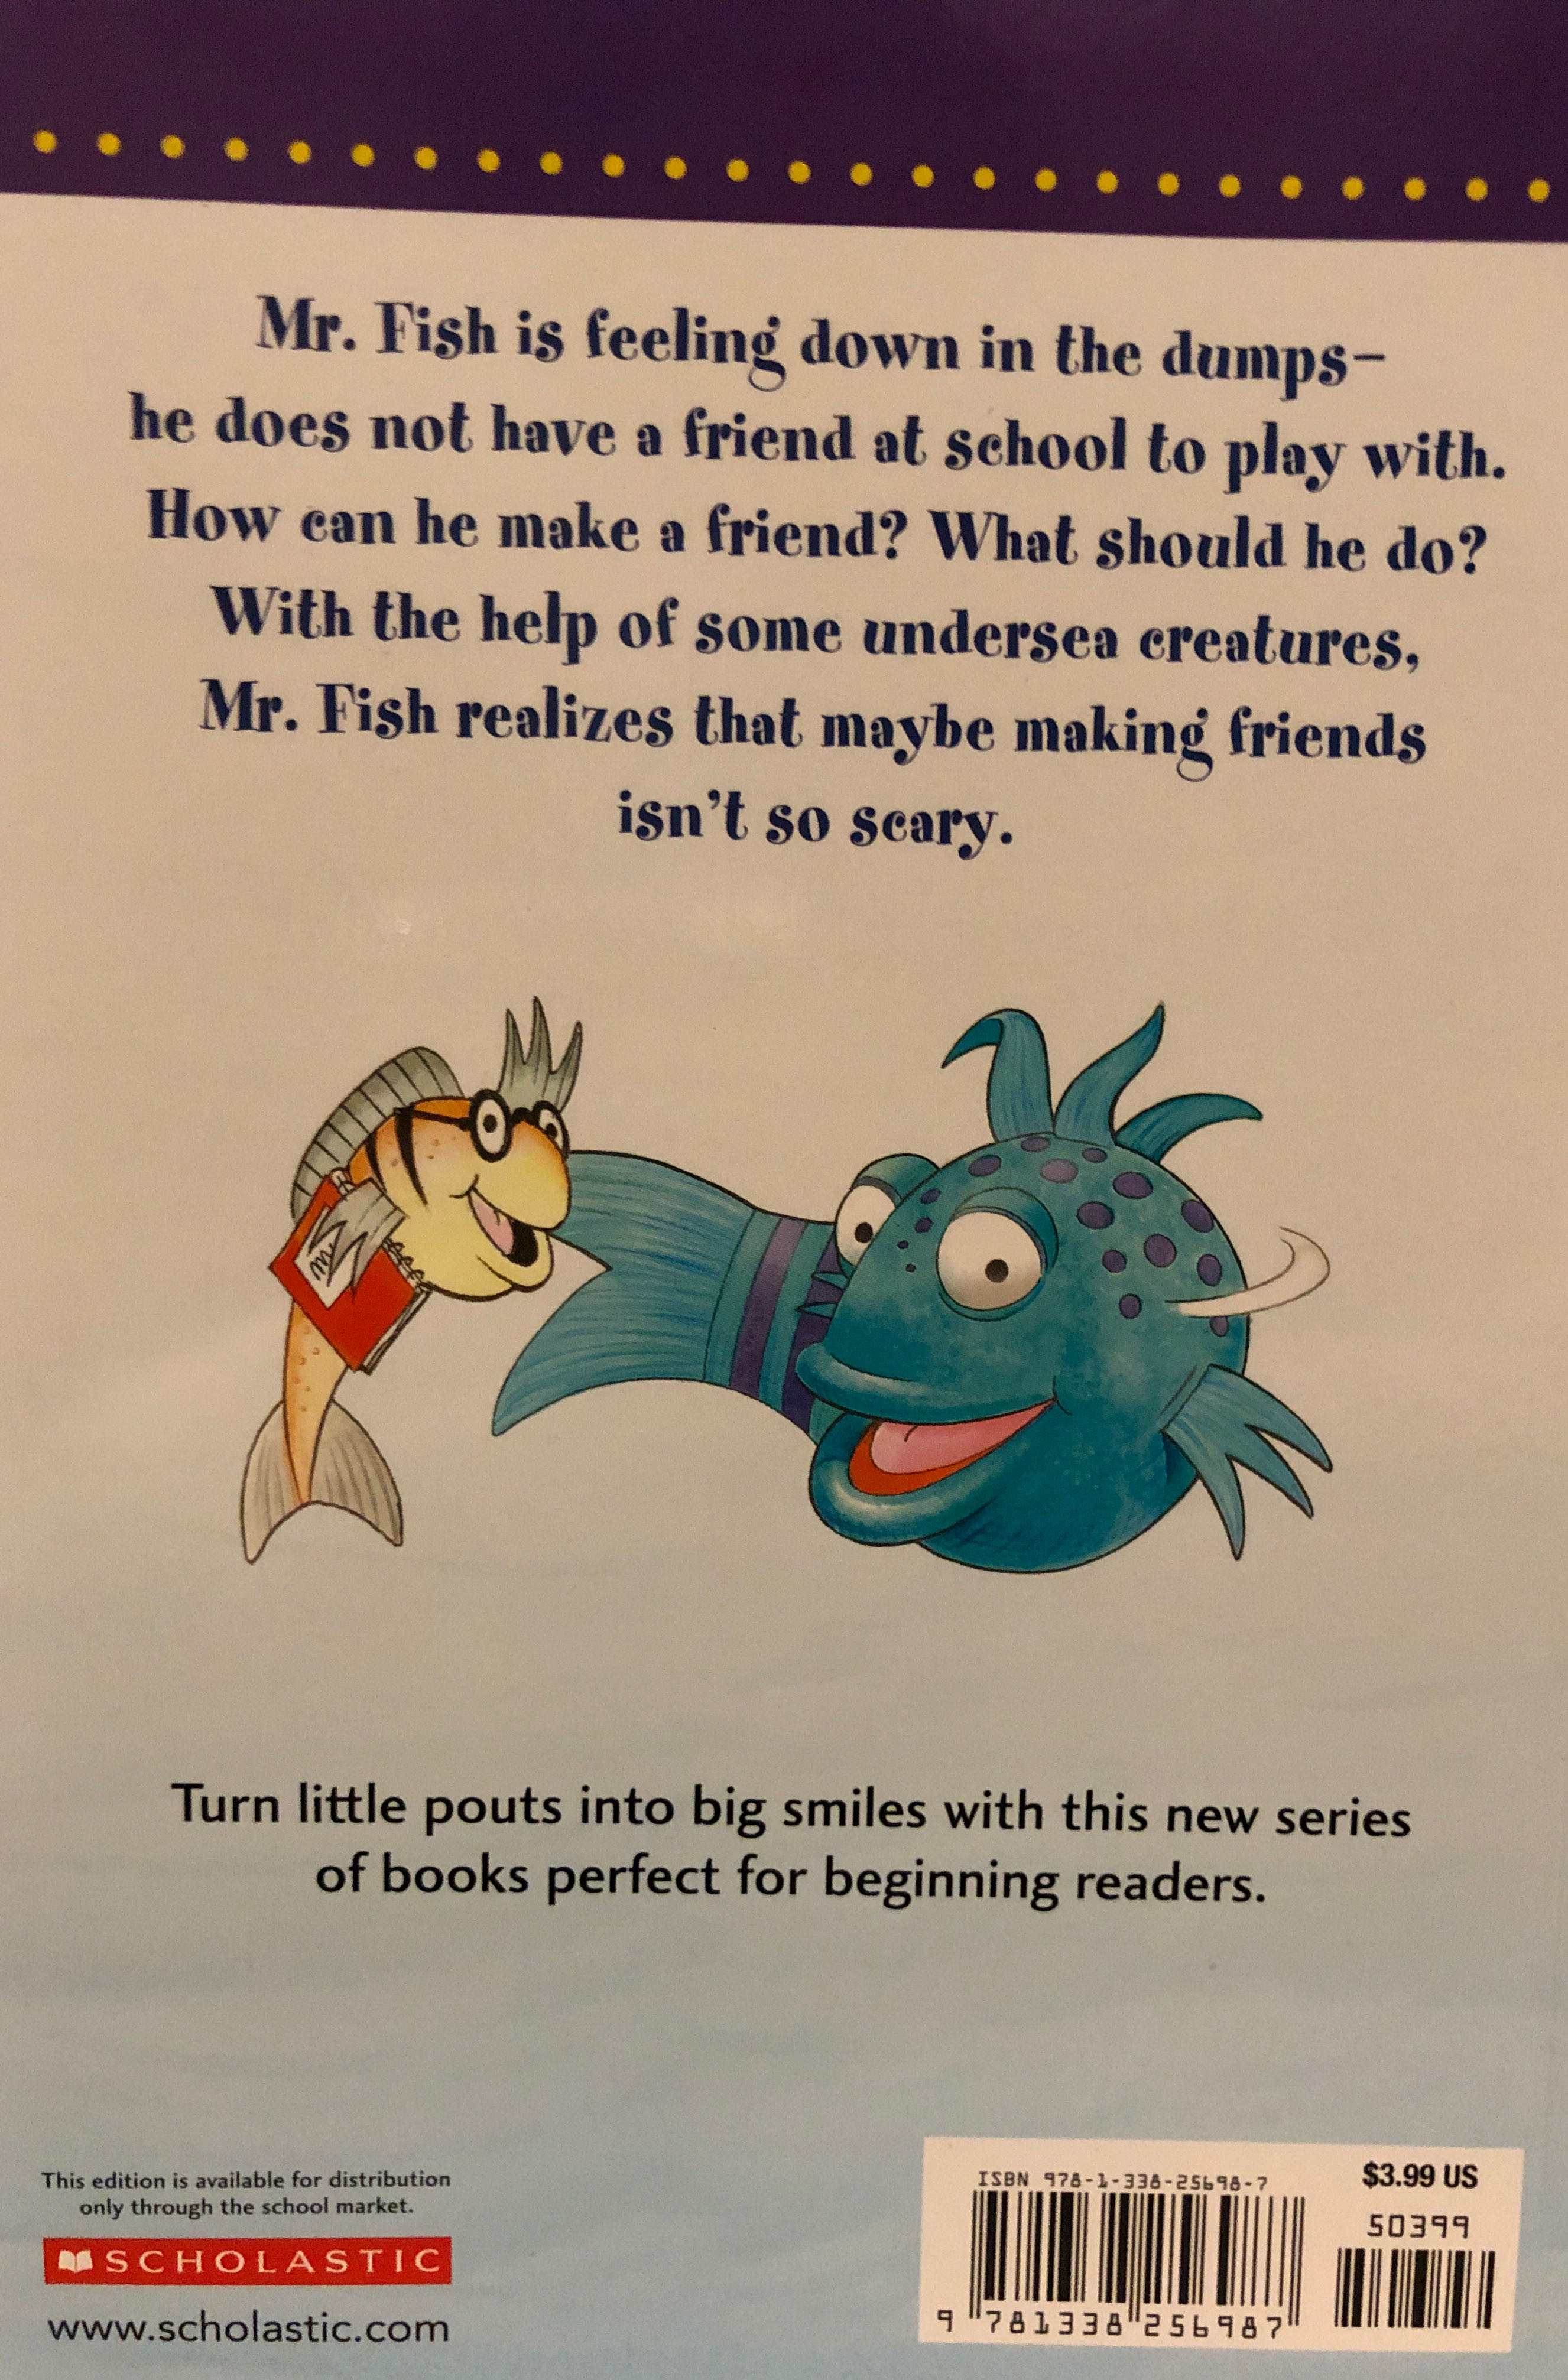 You Can Make A Friend Pout-Pout Fish! - Deborah Diesen (Scholastic Inc - Paperback) book collectible [Barcode 9781338256987] - Main Image 2